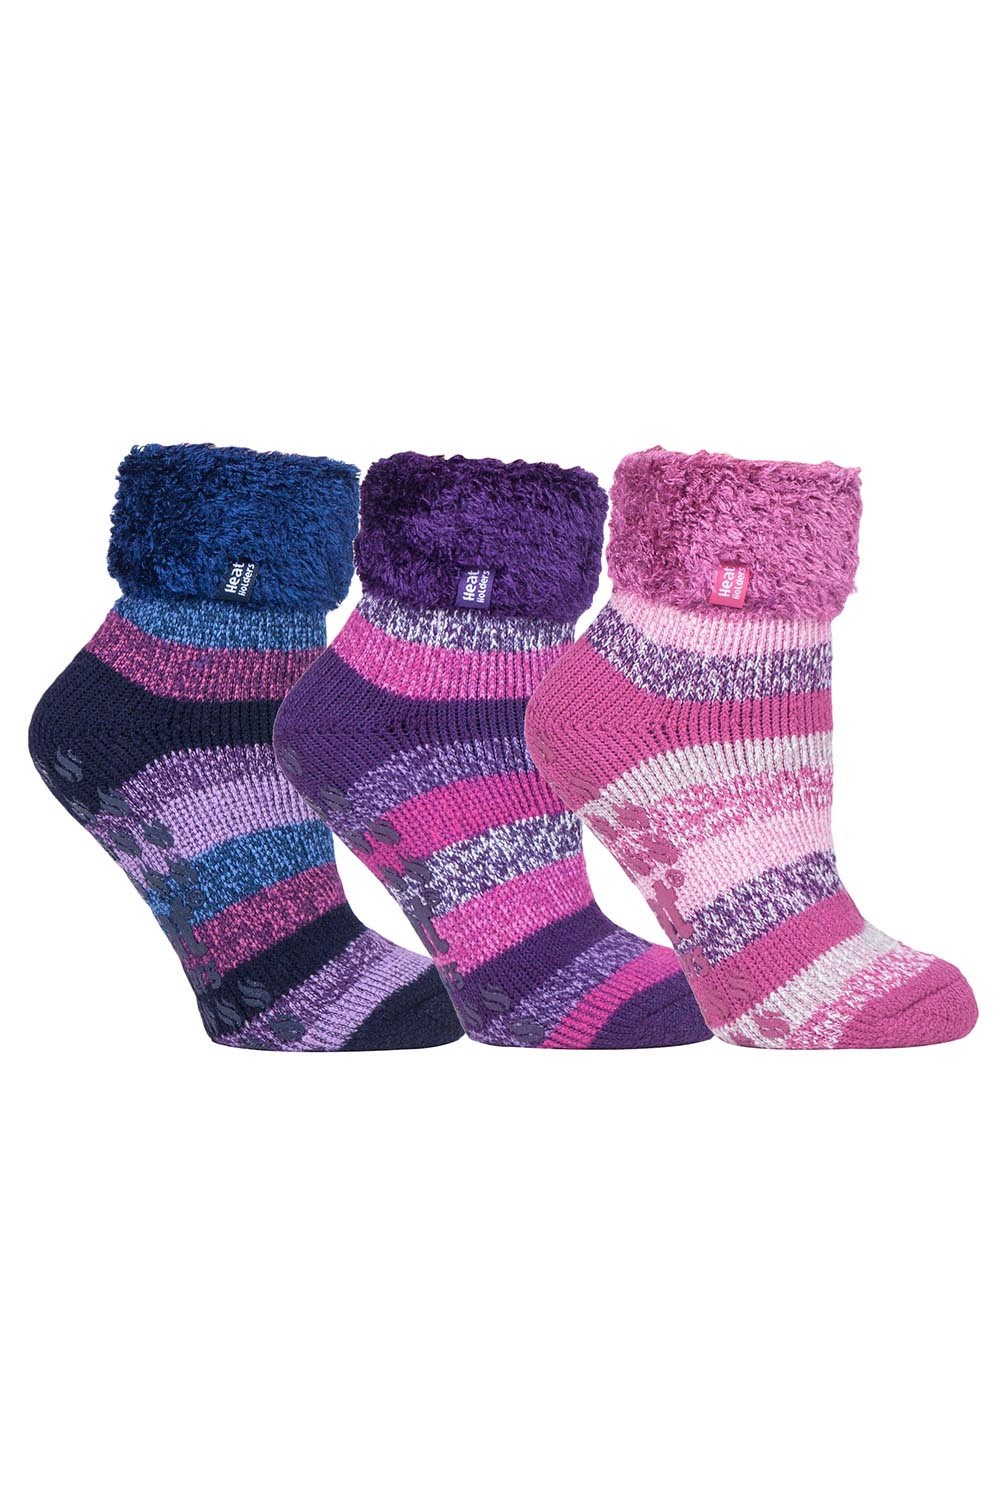 MFA188 Womens Thermal Non-Slip Bed Socks 3-Pack